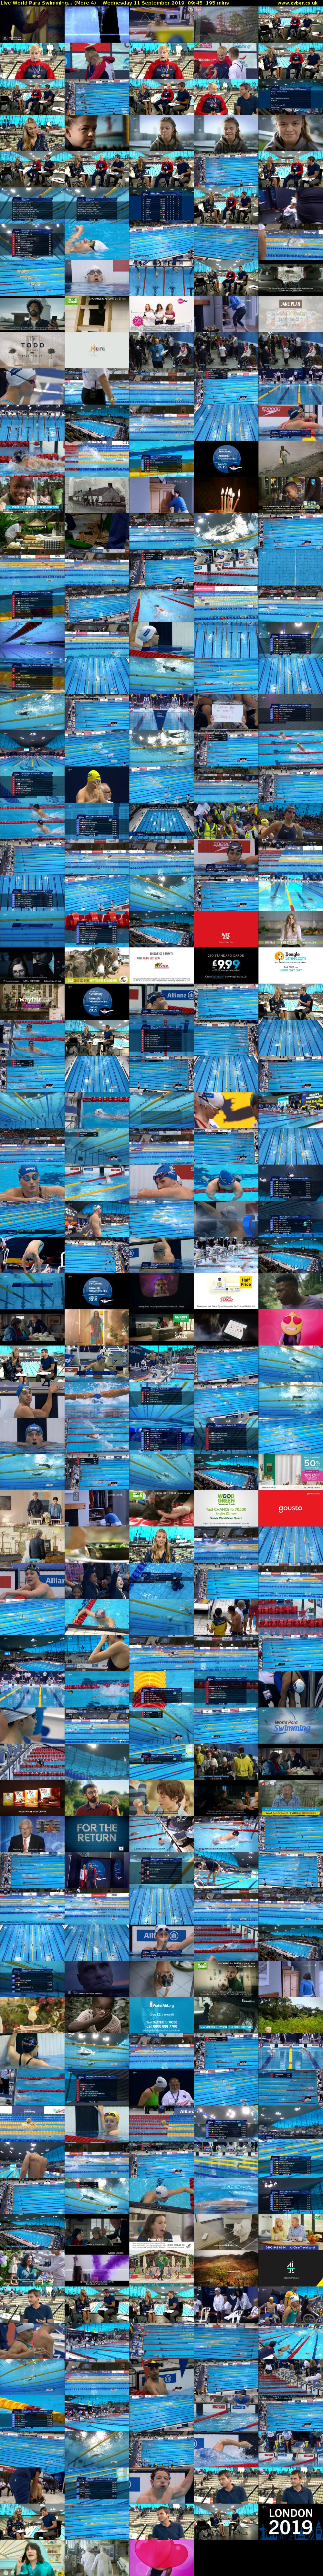 Live World Para Swimming... (More 4) Wednesday 11 September 2019 09:45 - 13:00